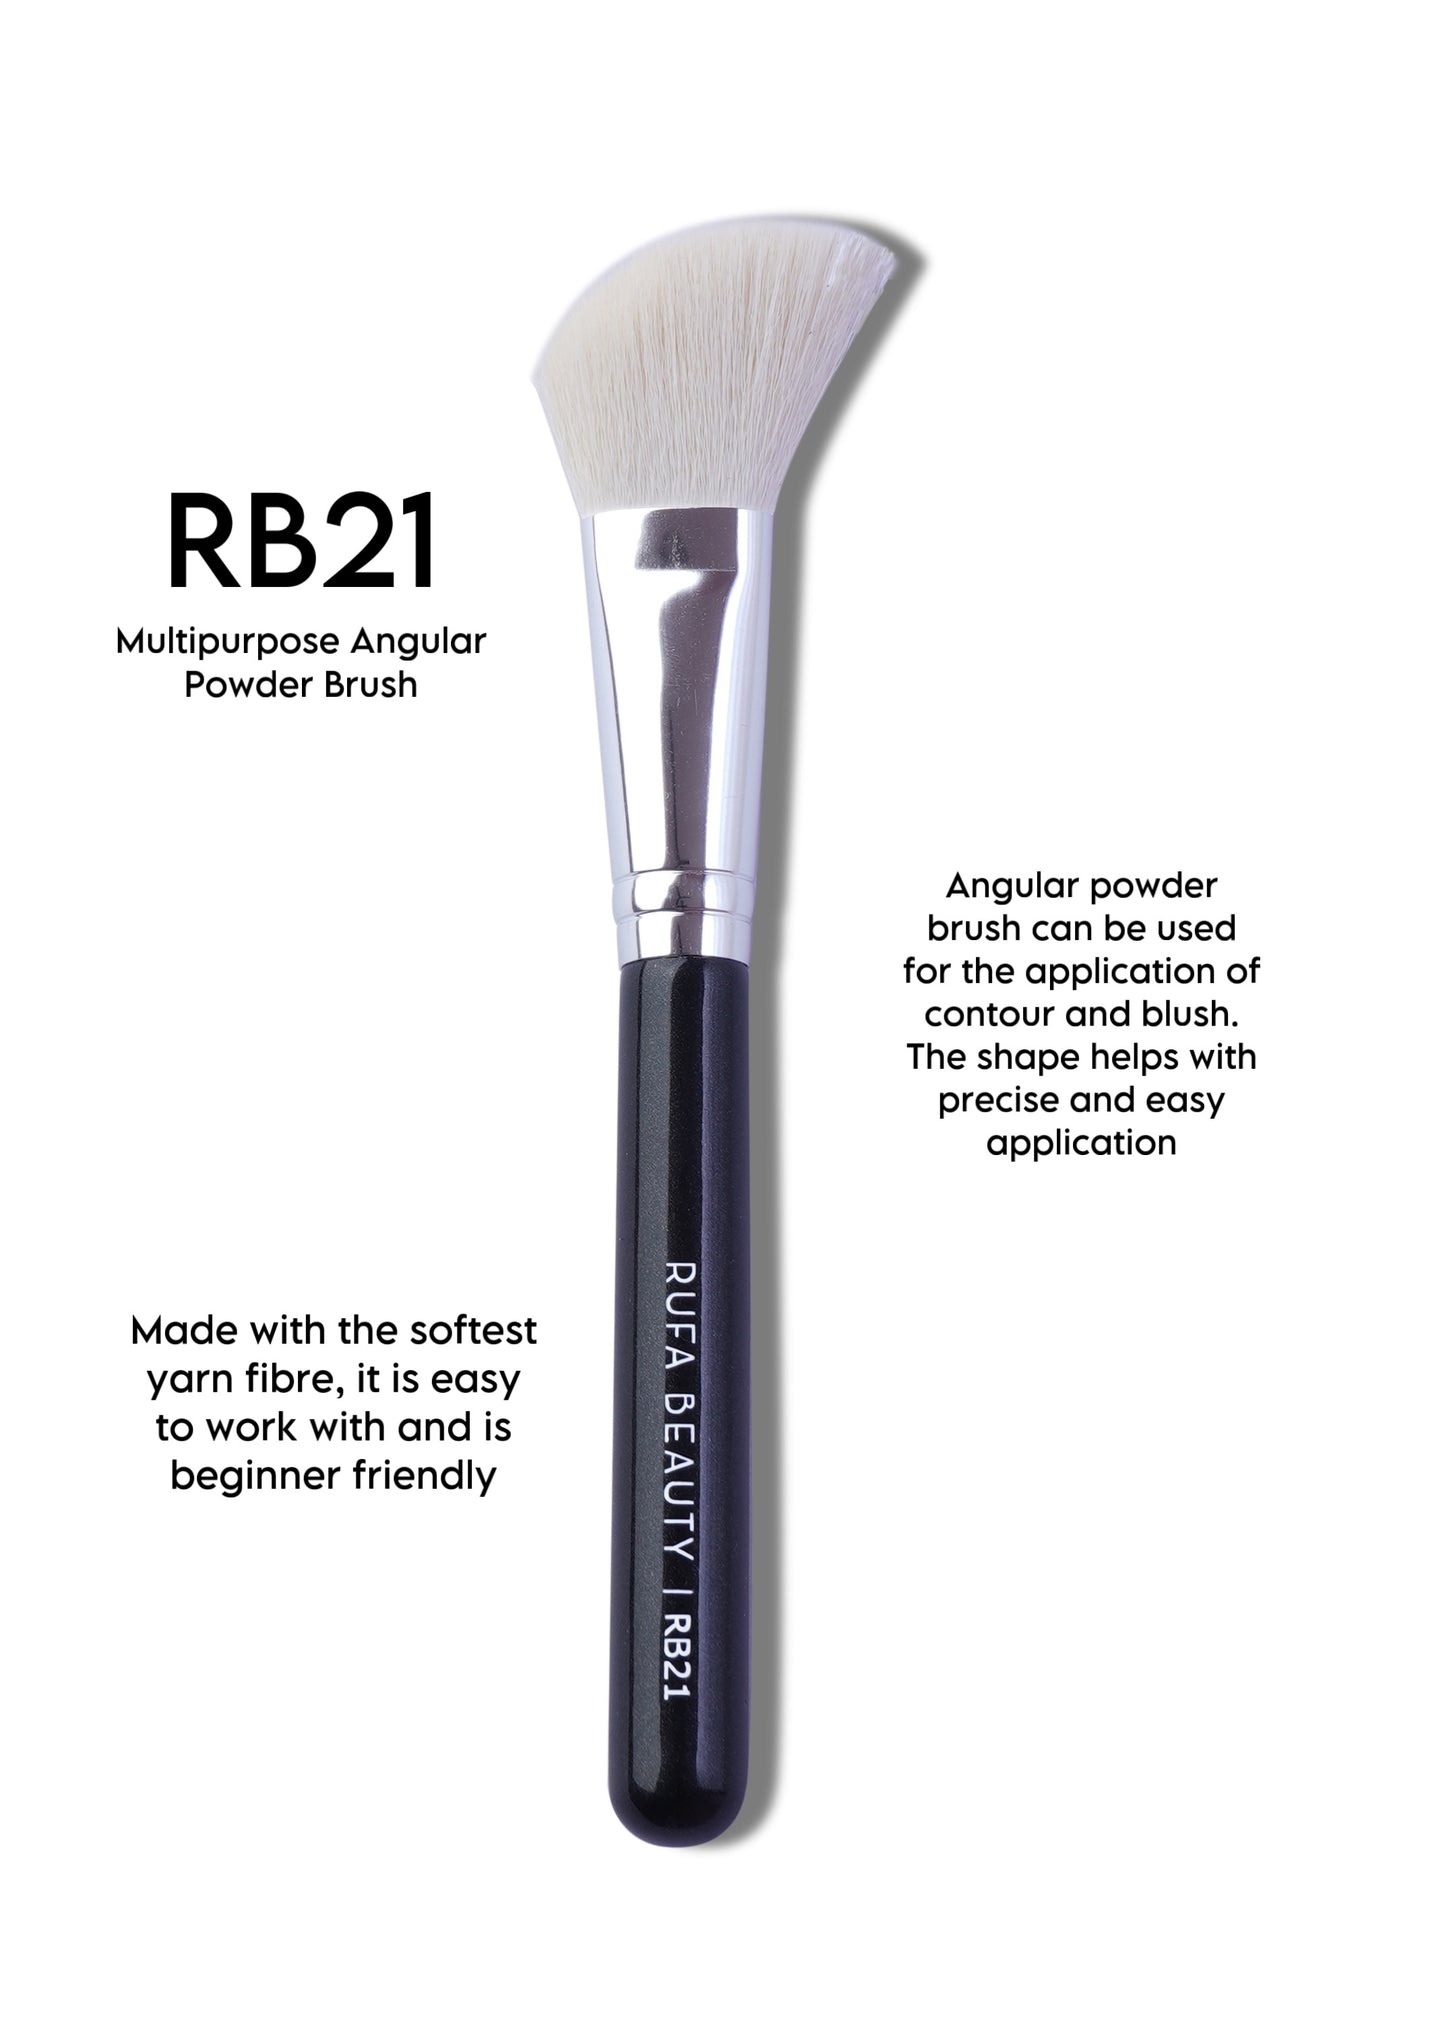 RB21 Angular powder Brush